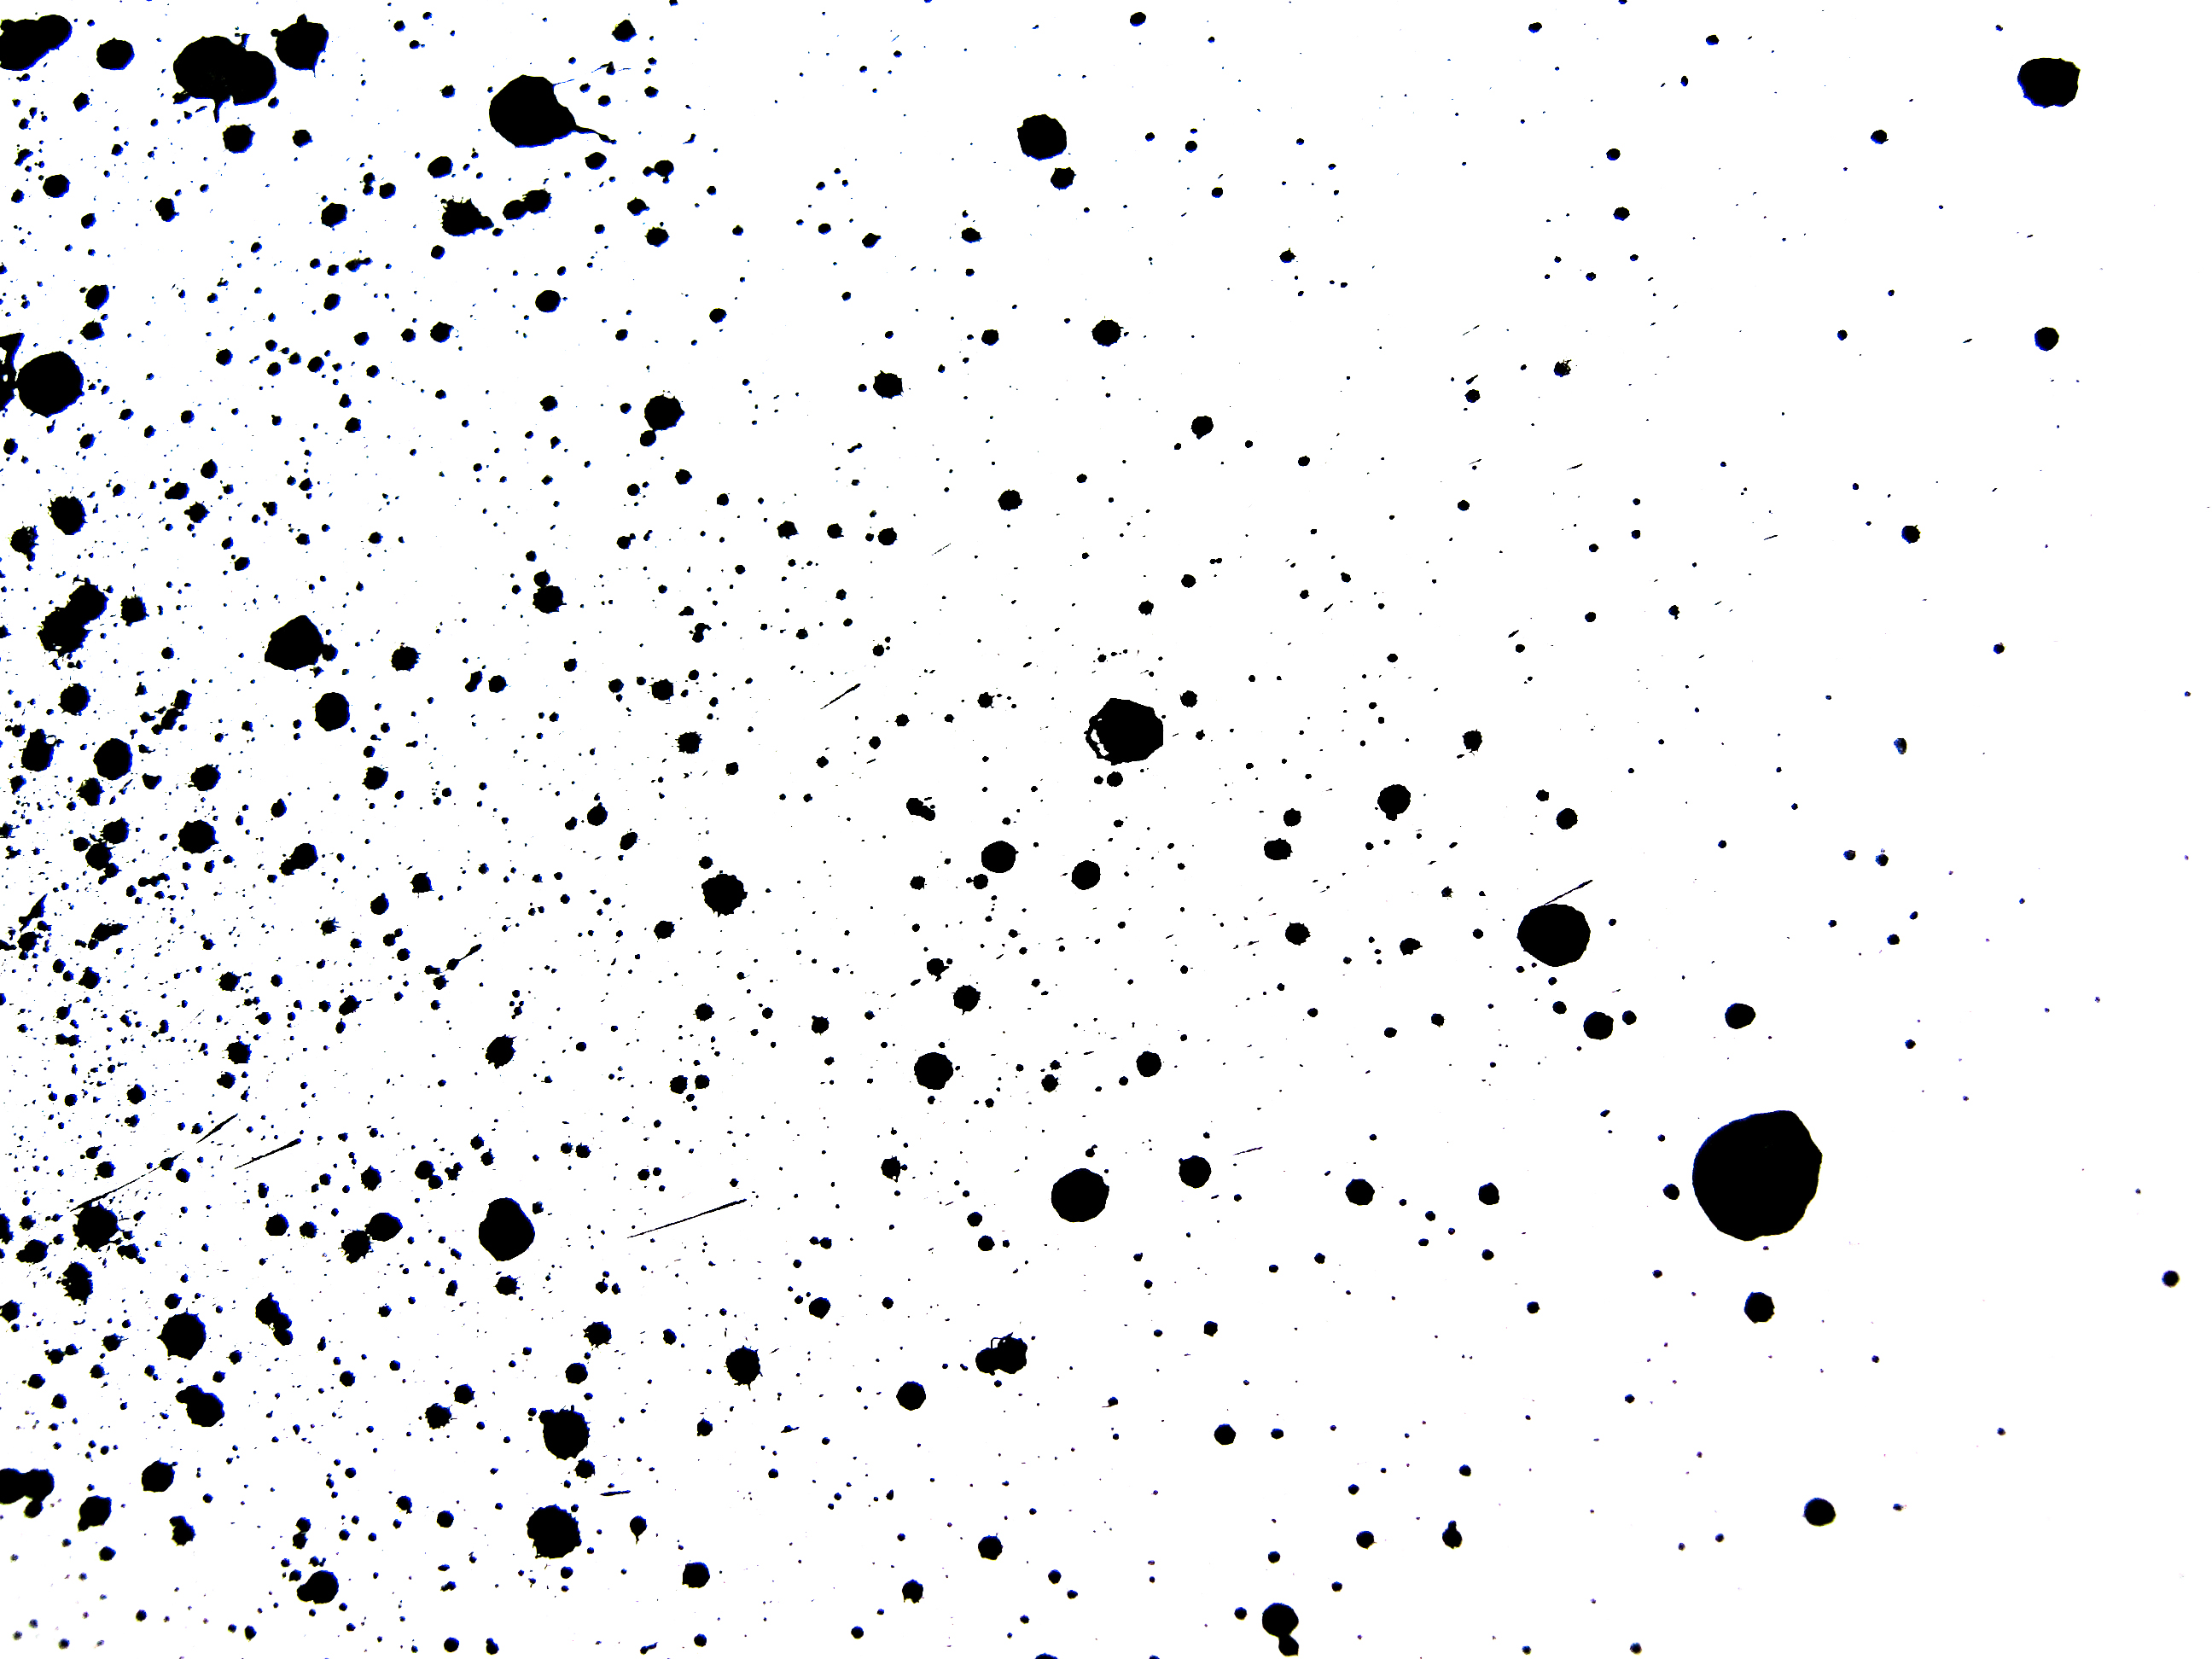 Black ink splatters